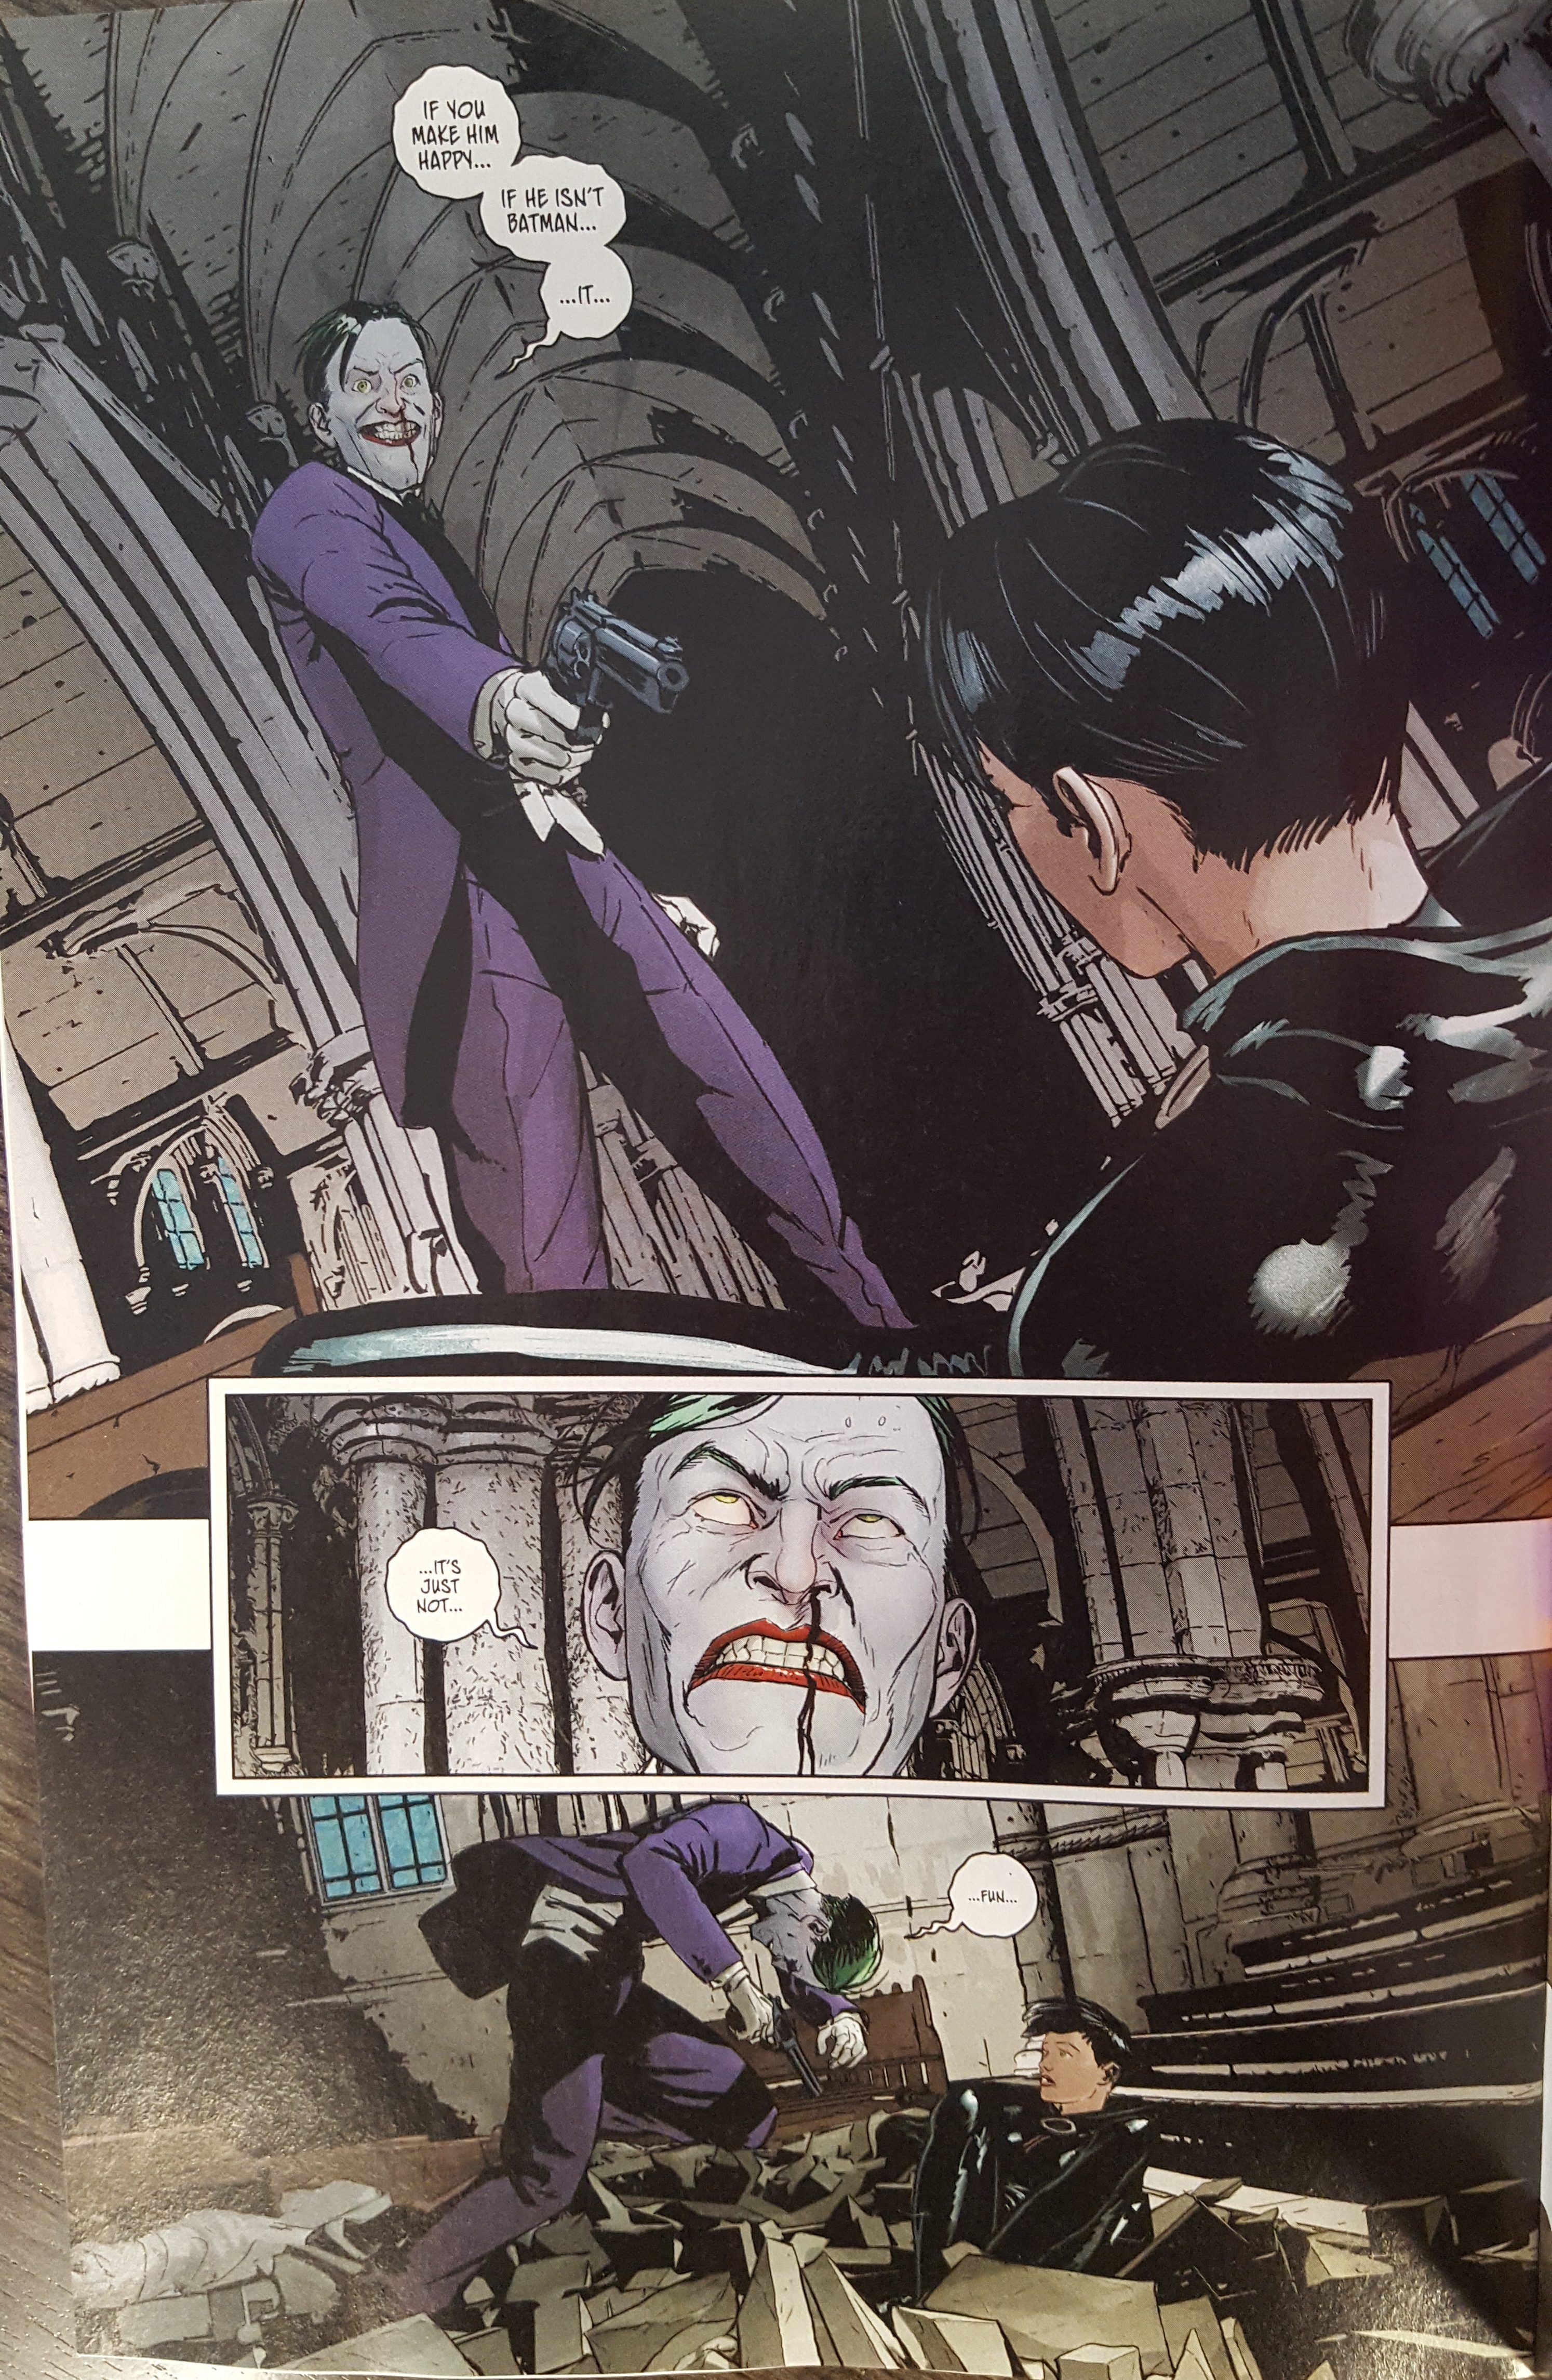 Batman #49